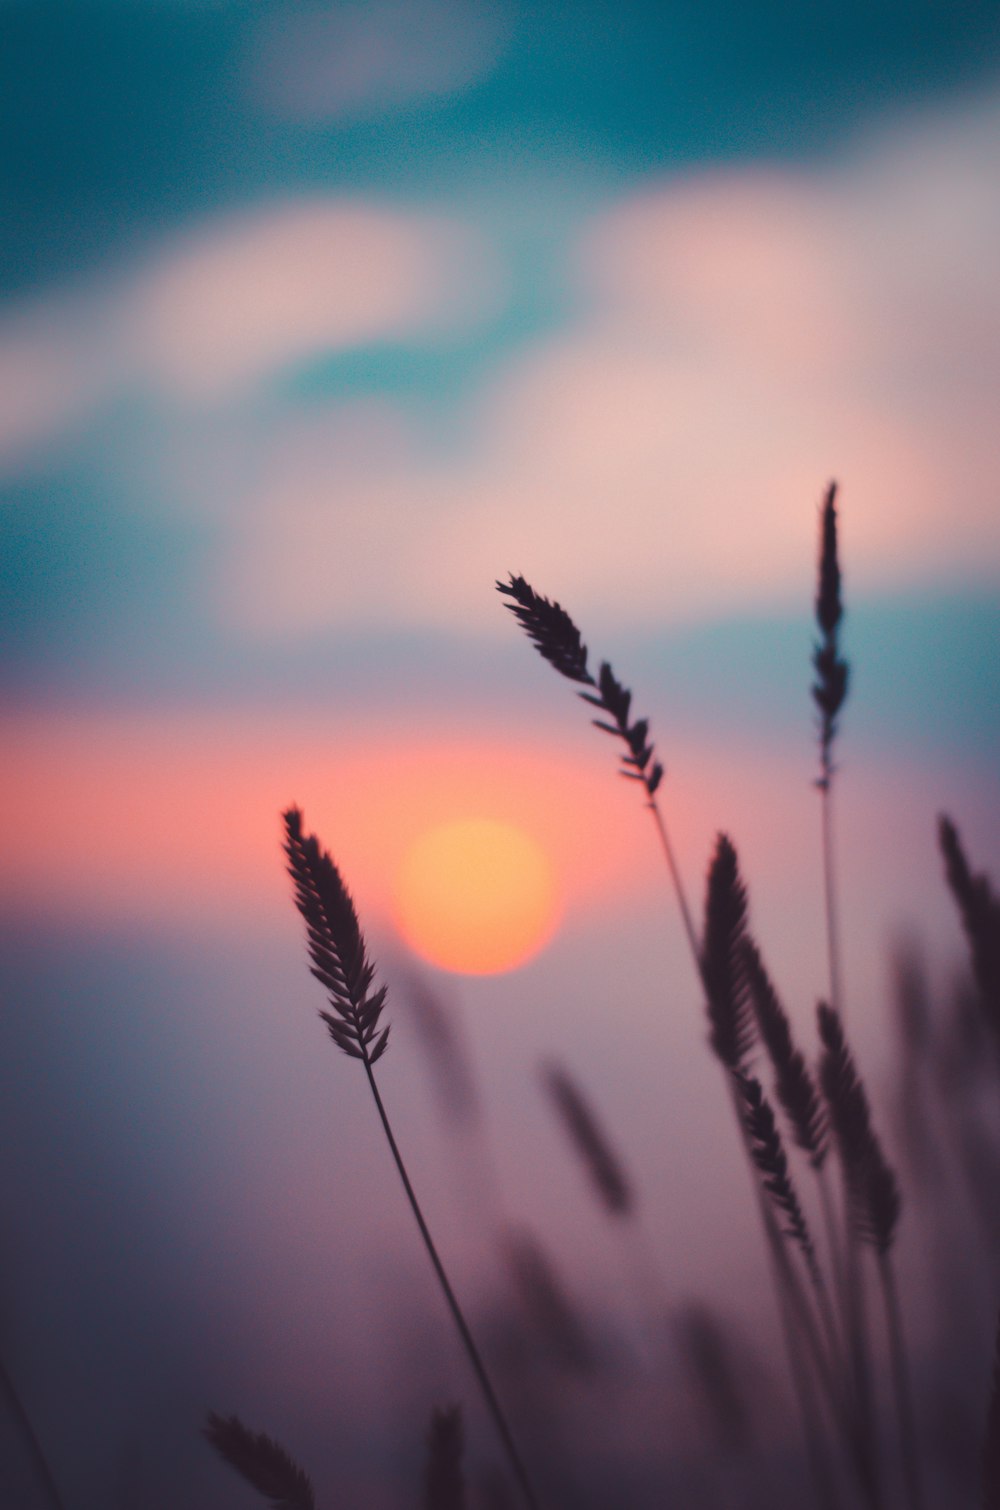 20+ Sunset Images [Stunning]   Download Free Images on Unsplash Inspiring